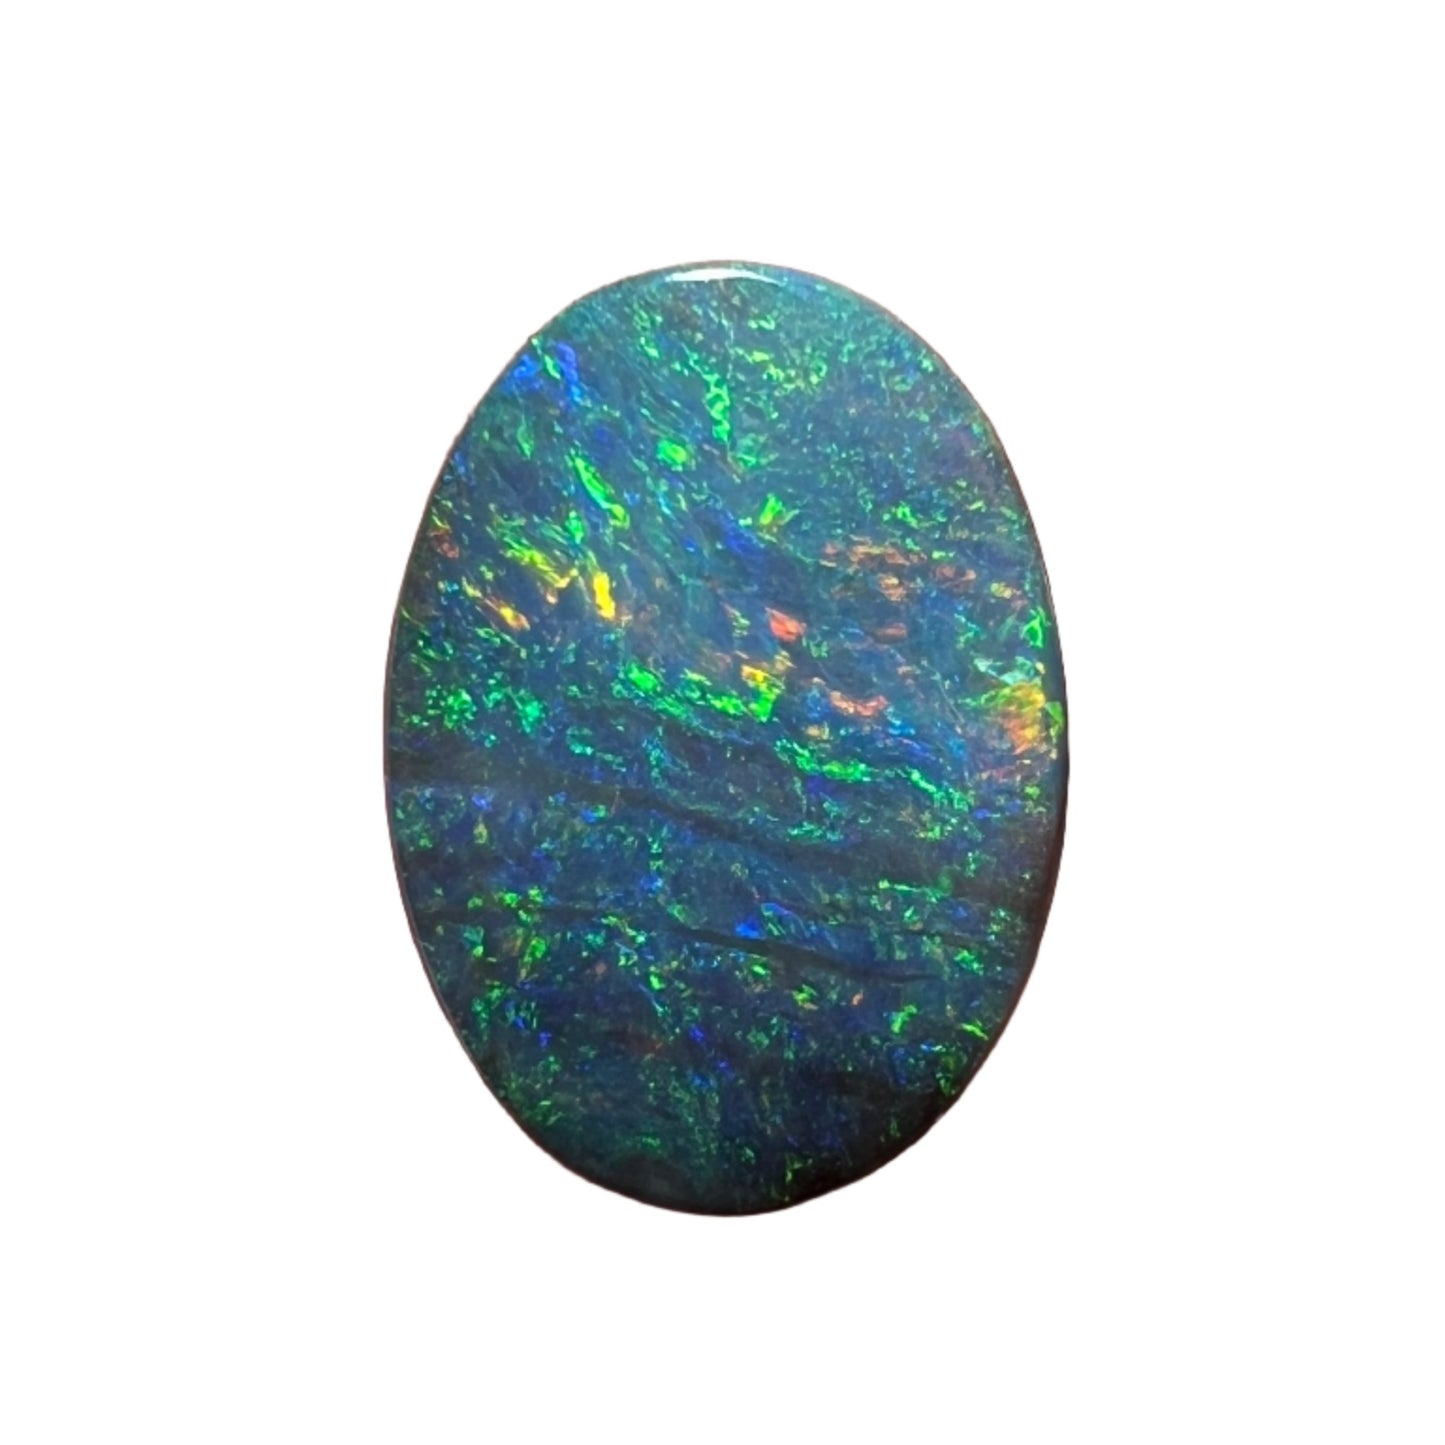 4.04 Ct classic oval boulder opal